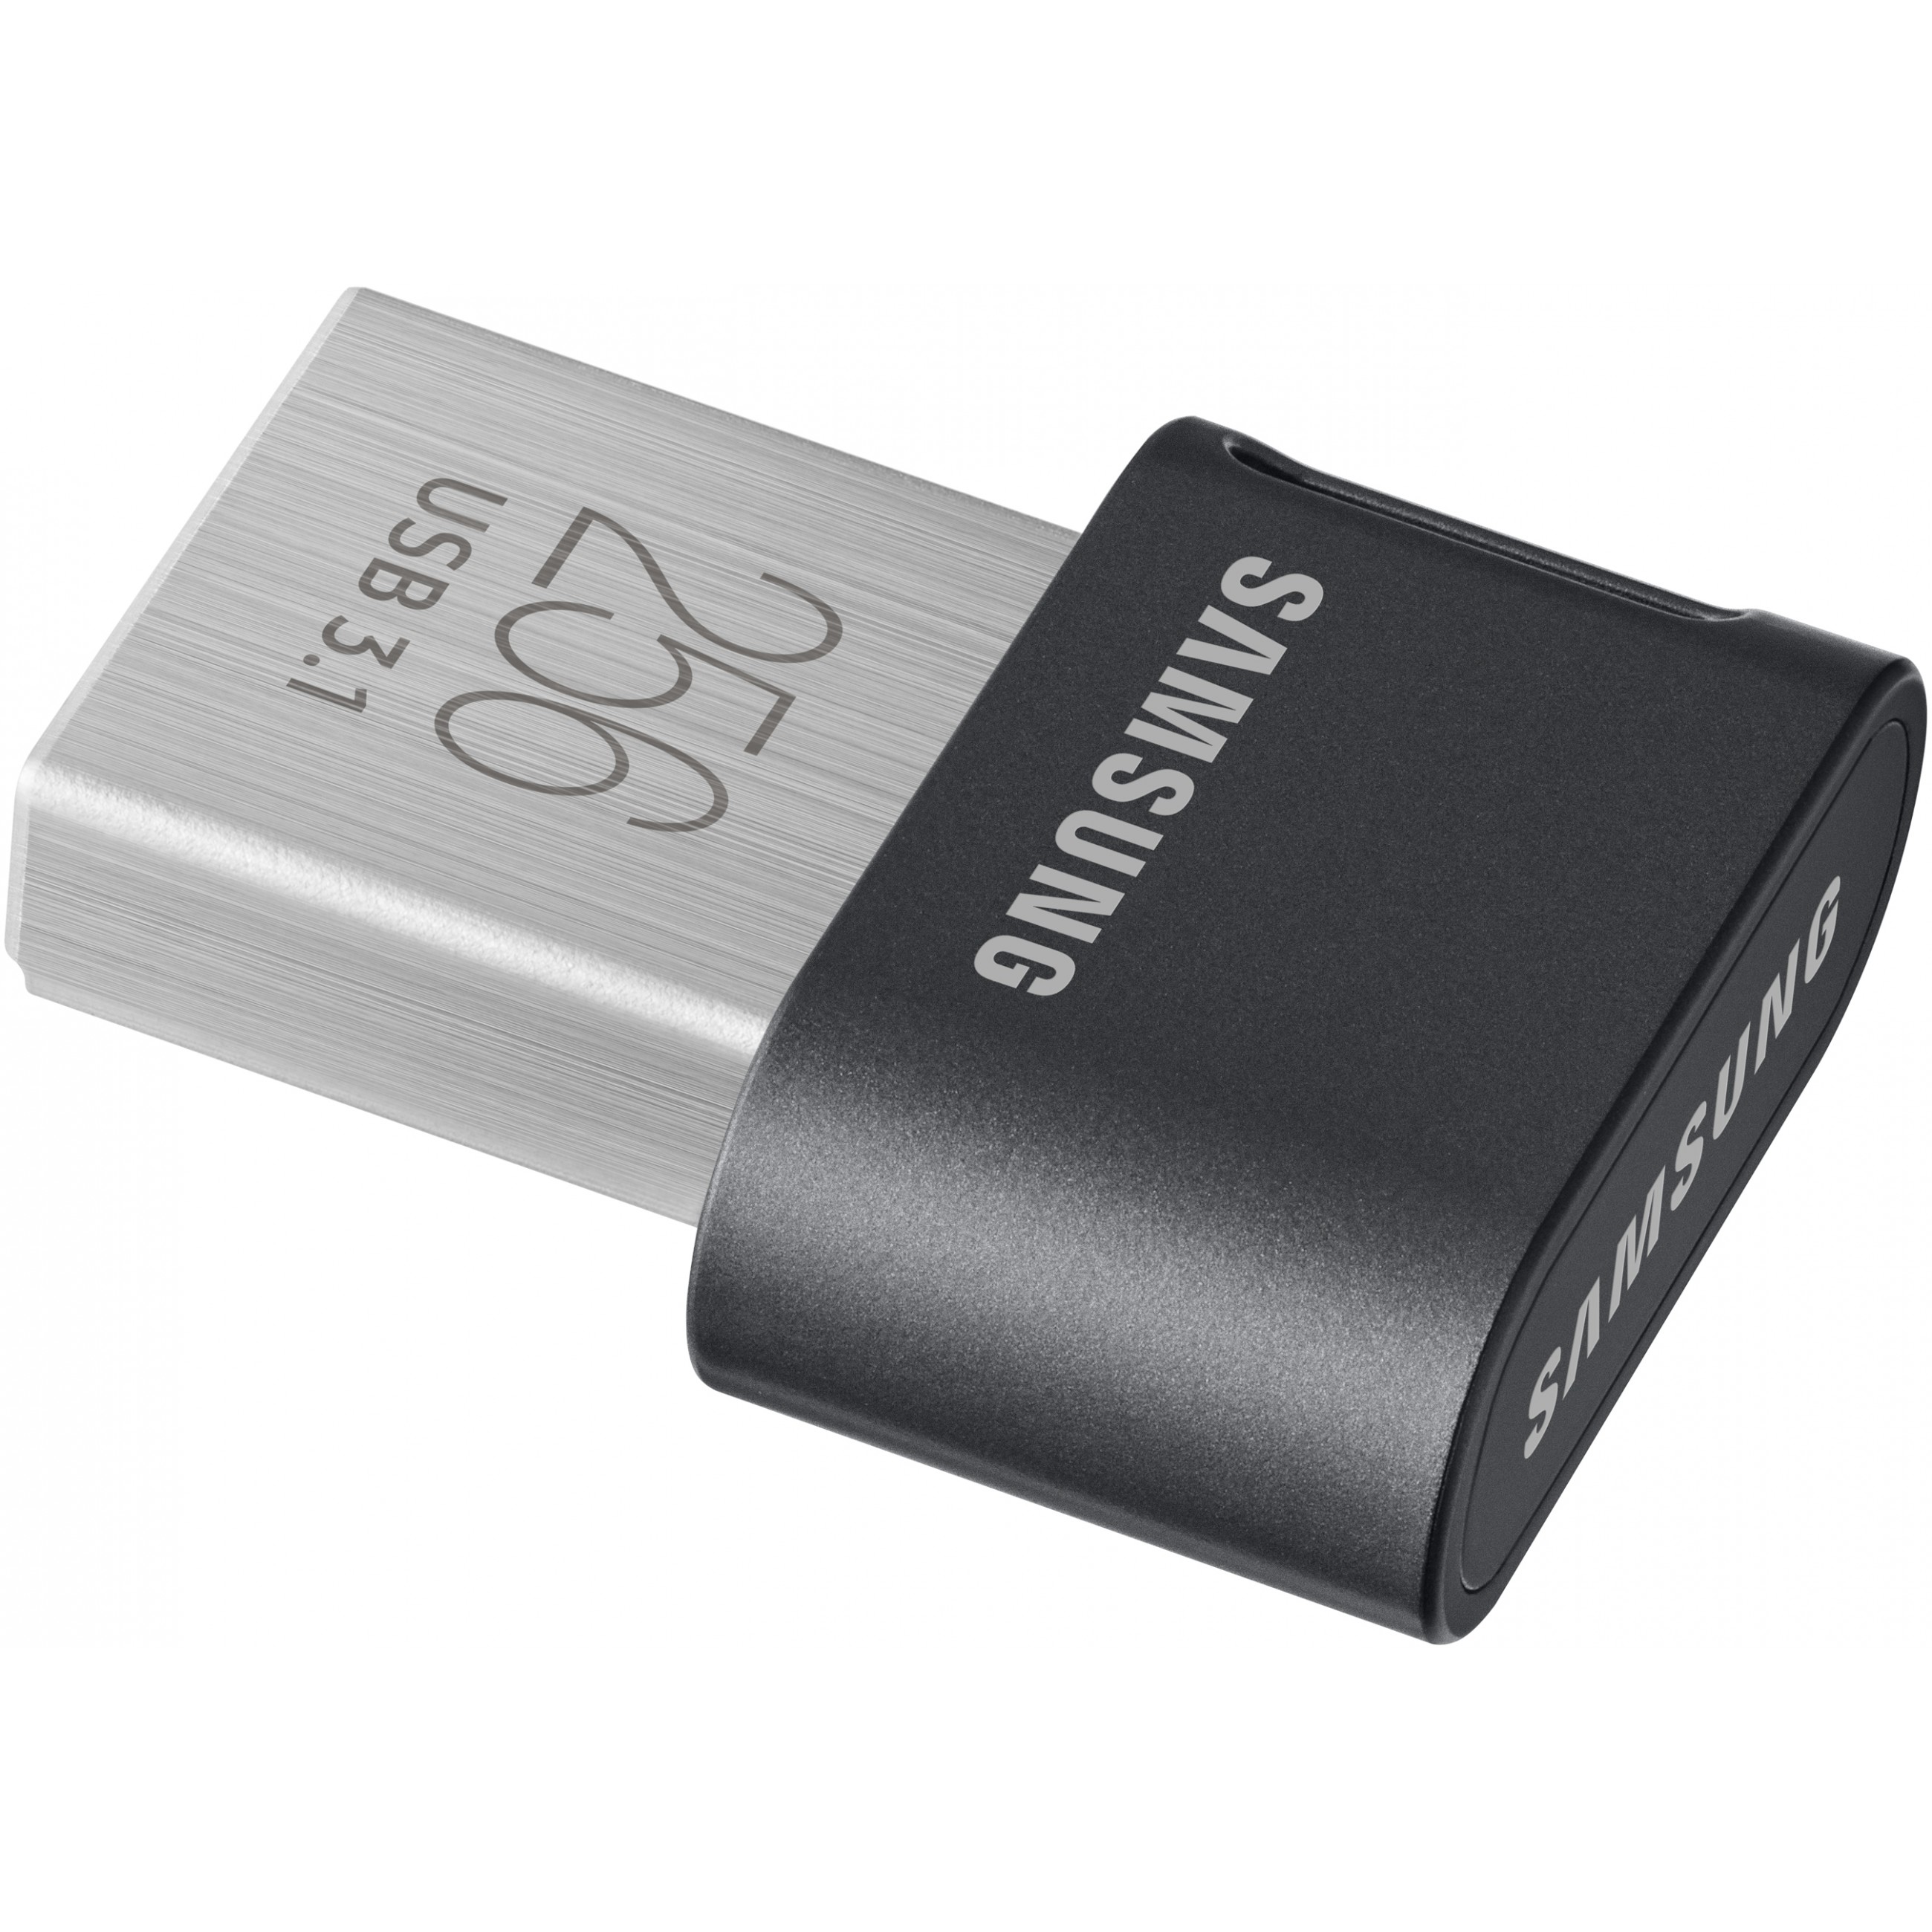 SAMSUNG MUF-256AB/APC, USB-Stick, Samsung MUF-256AB USB  (BILD6)